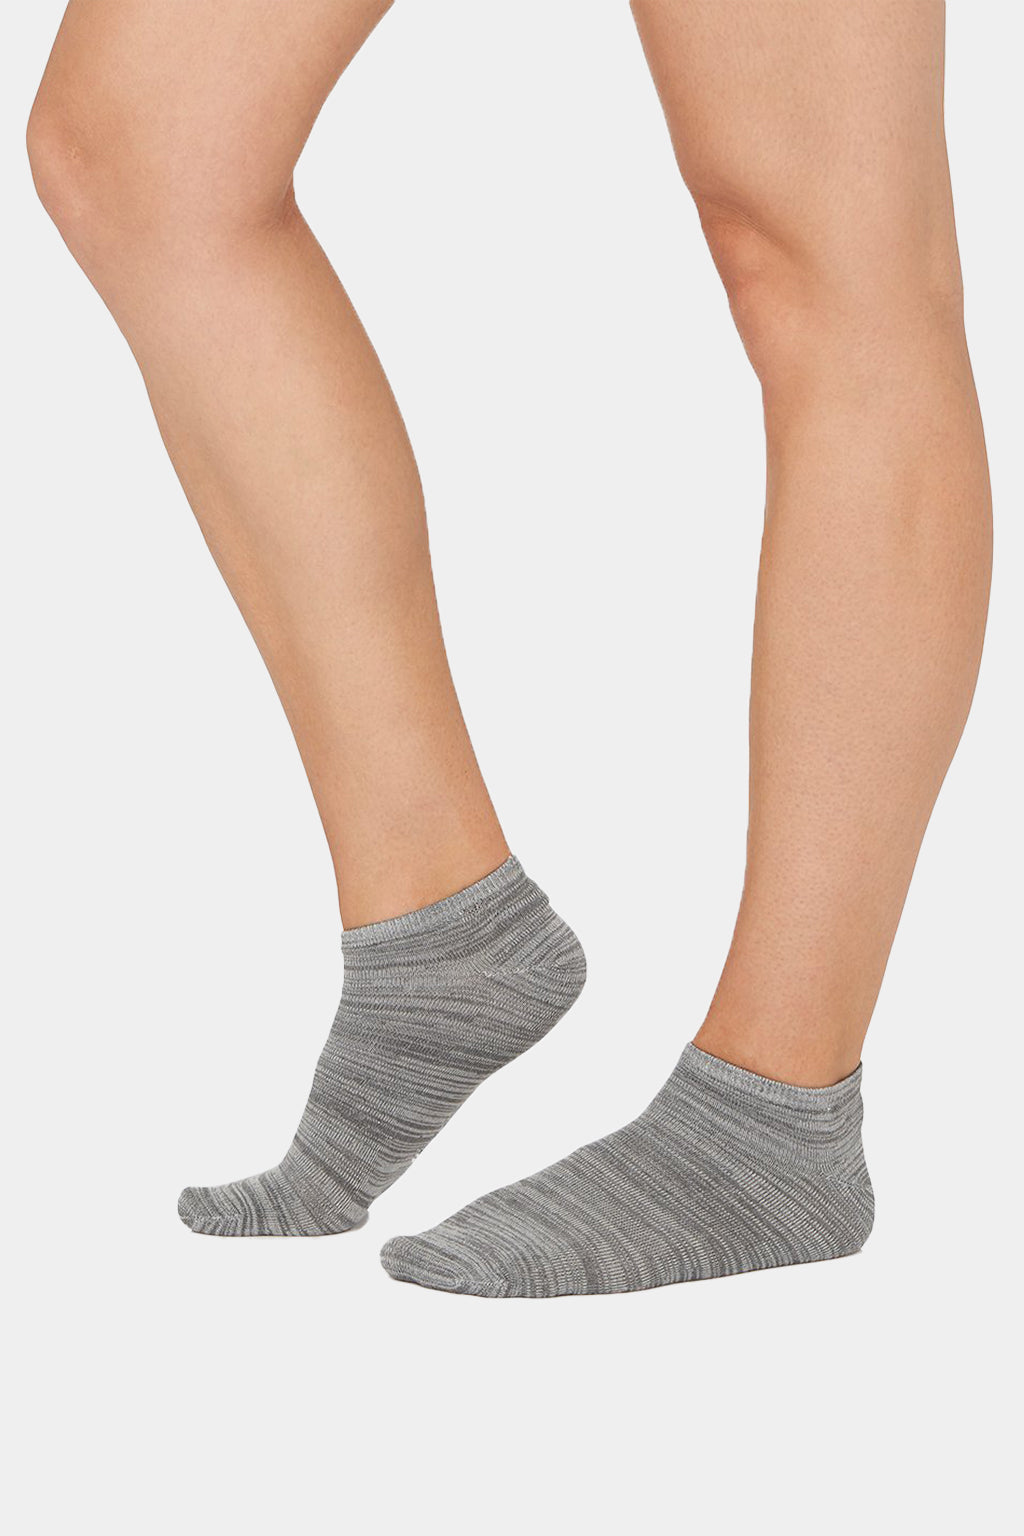 Boody - Women's Low Cut Sneaker Socks (Pairs of Three)